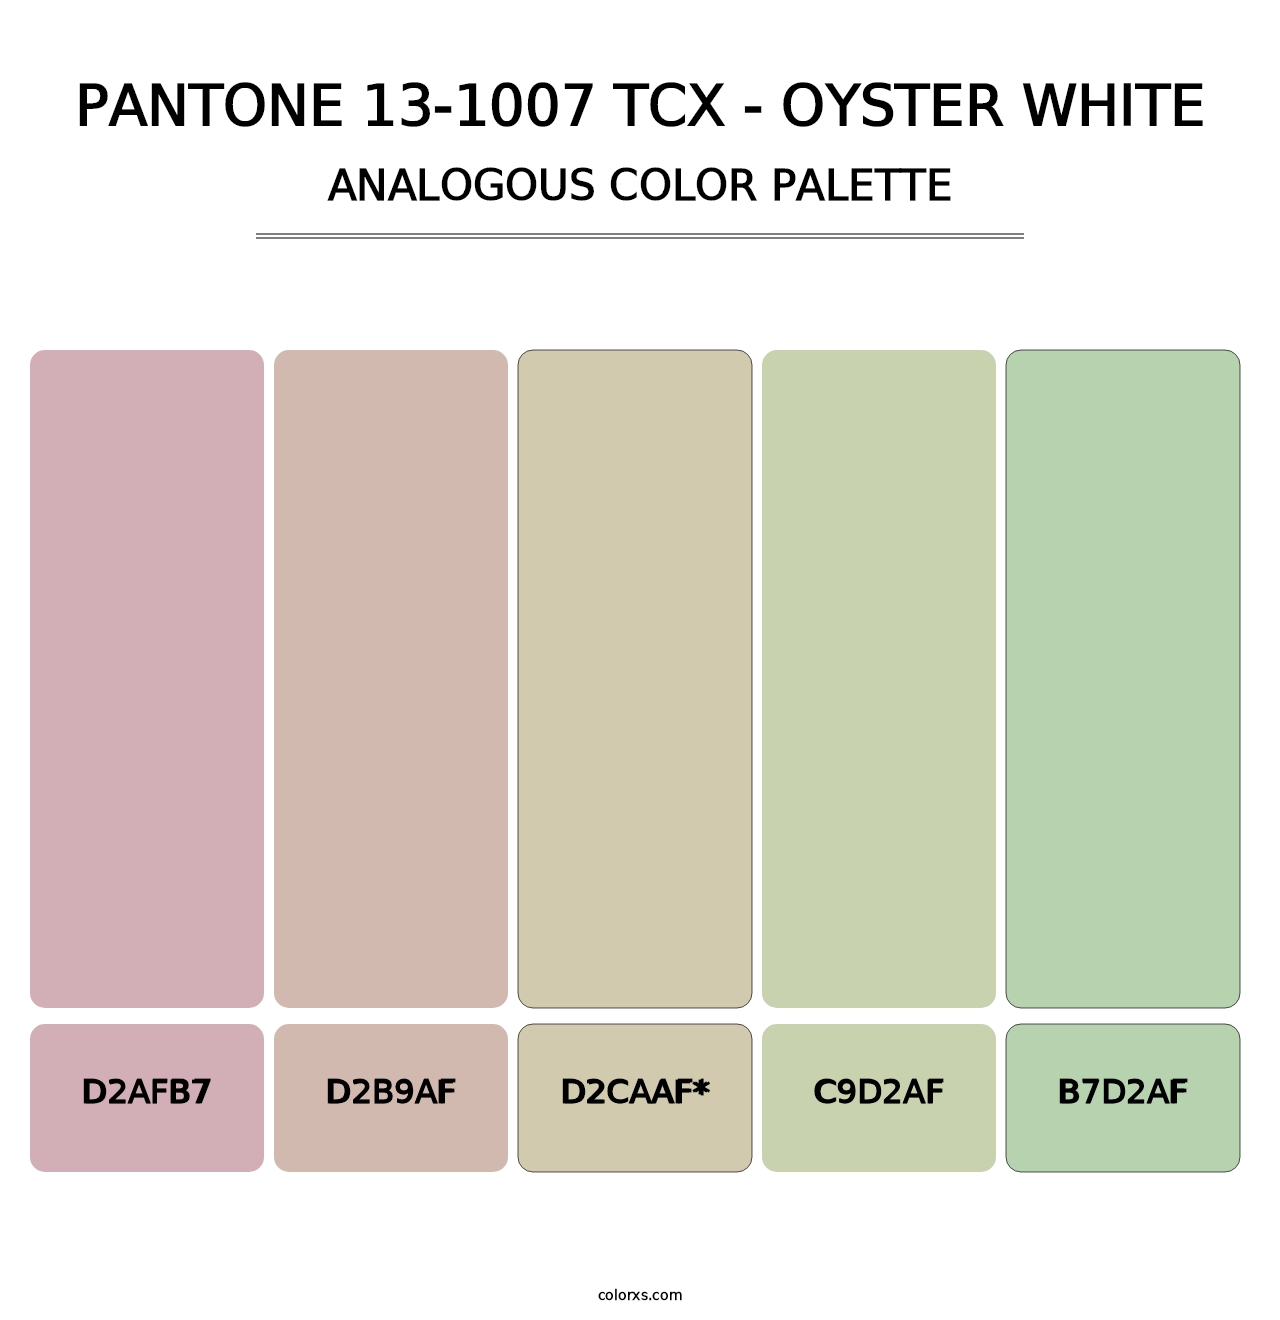 PANTONE 13-1007 TCX - Oyster White - Analogous Color Palette